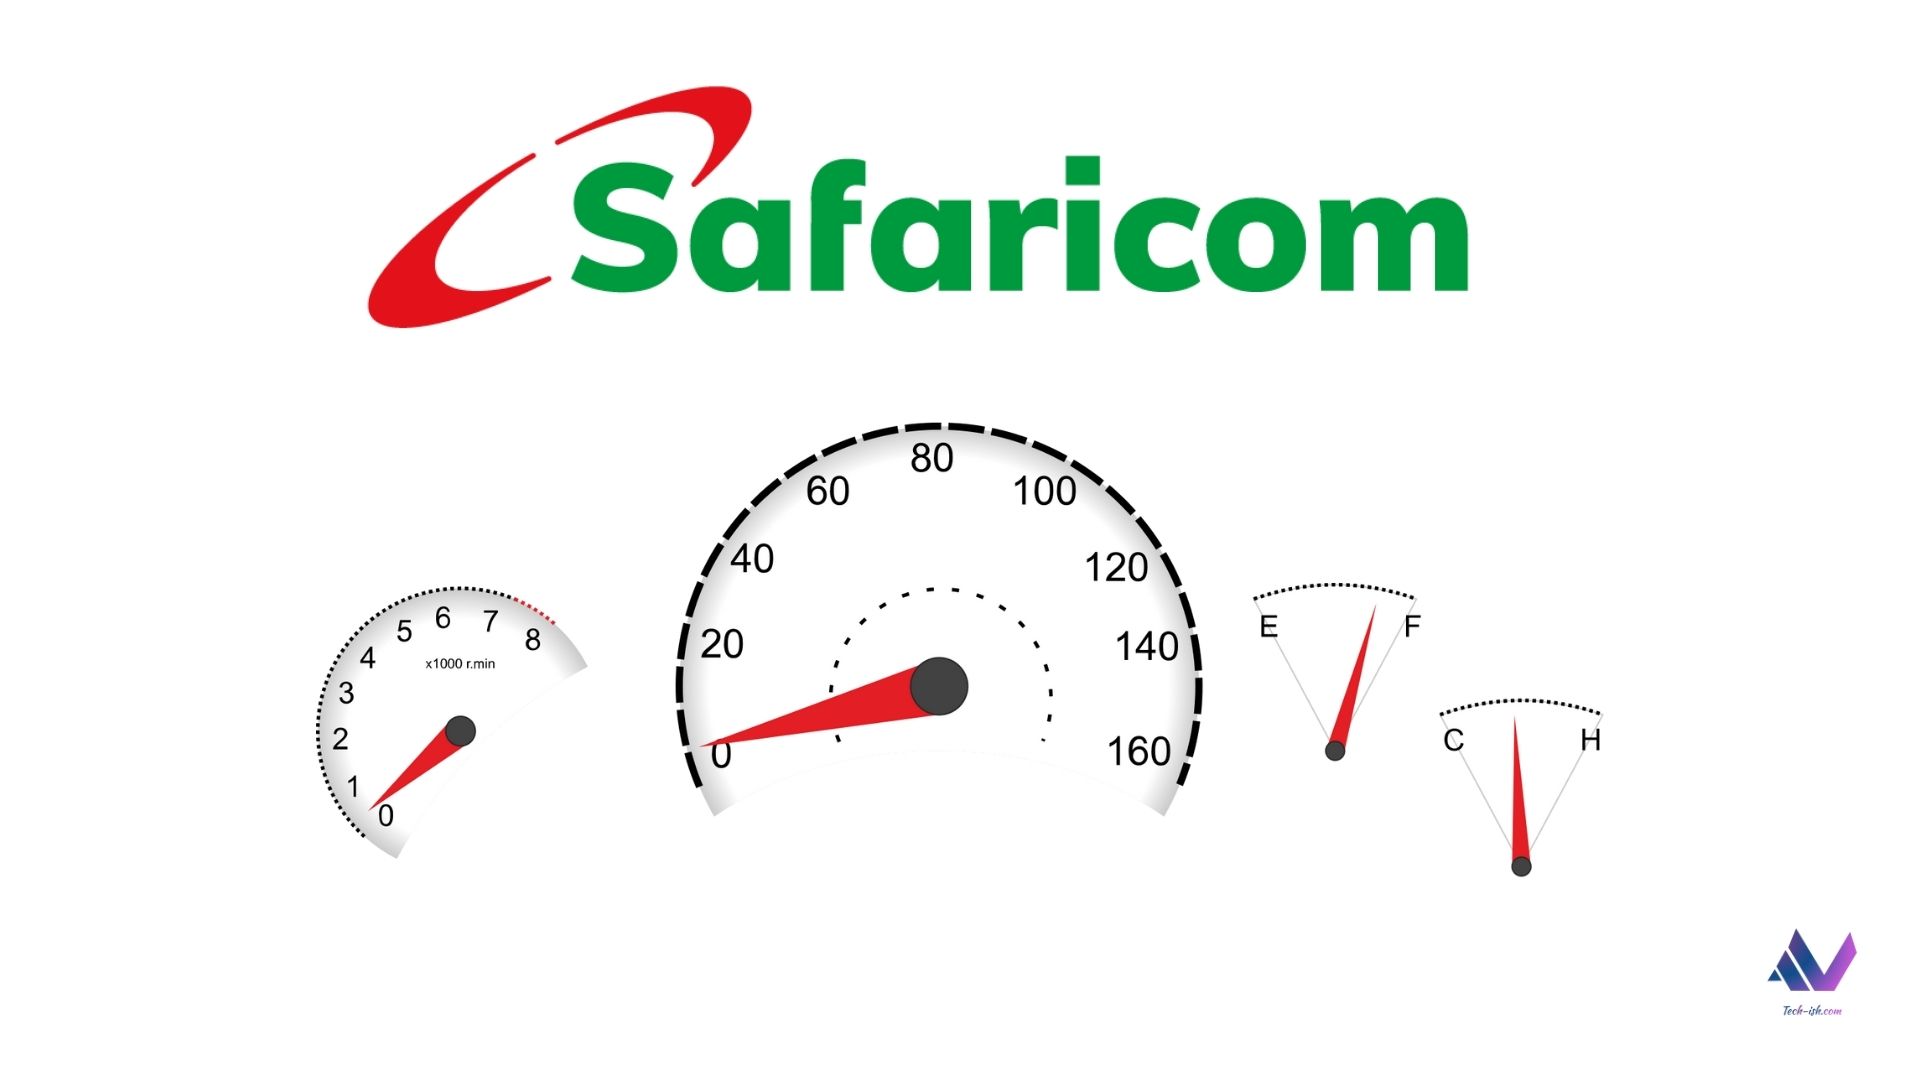 Safaricom running pilot on Smart Vehicle Tracking System